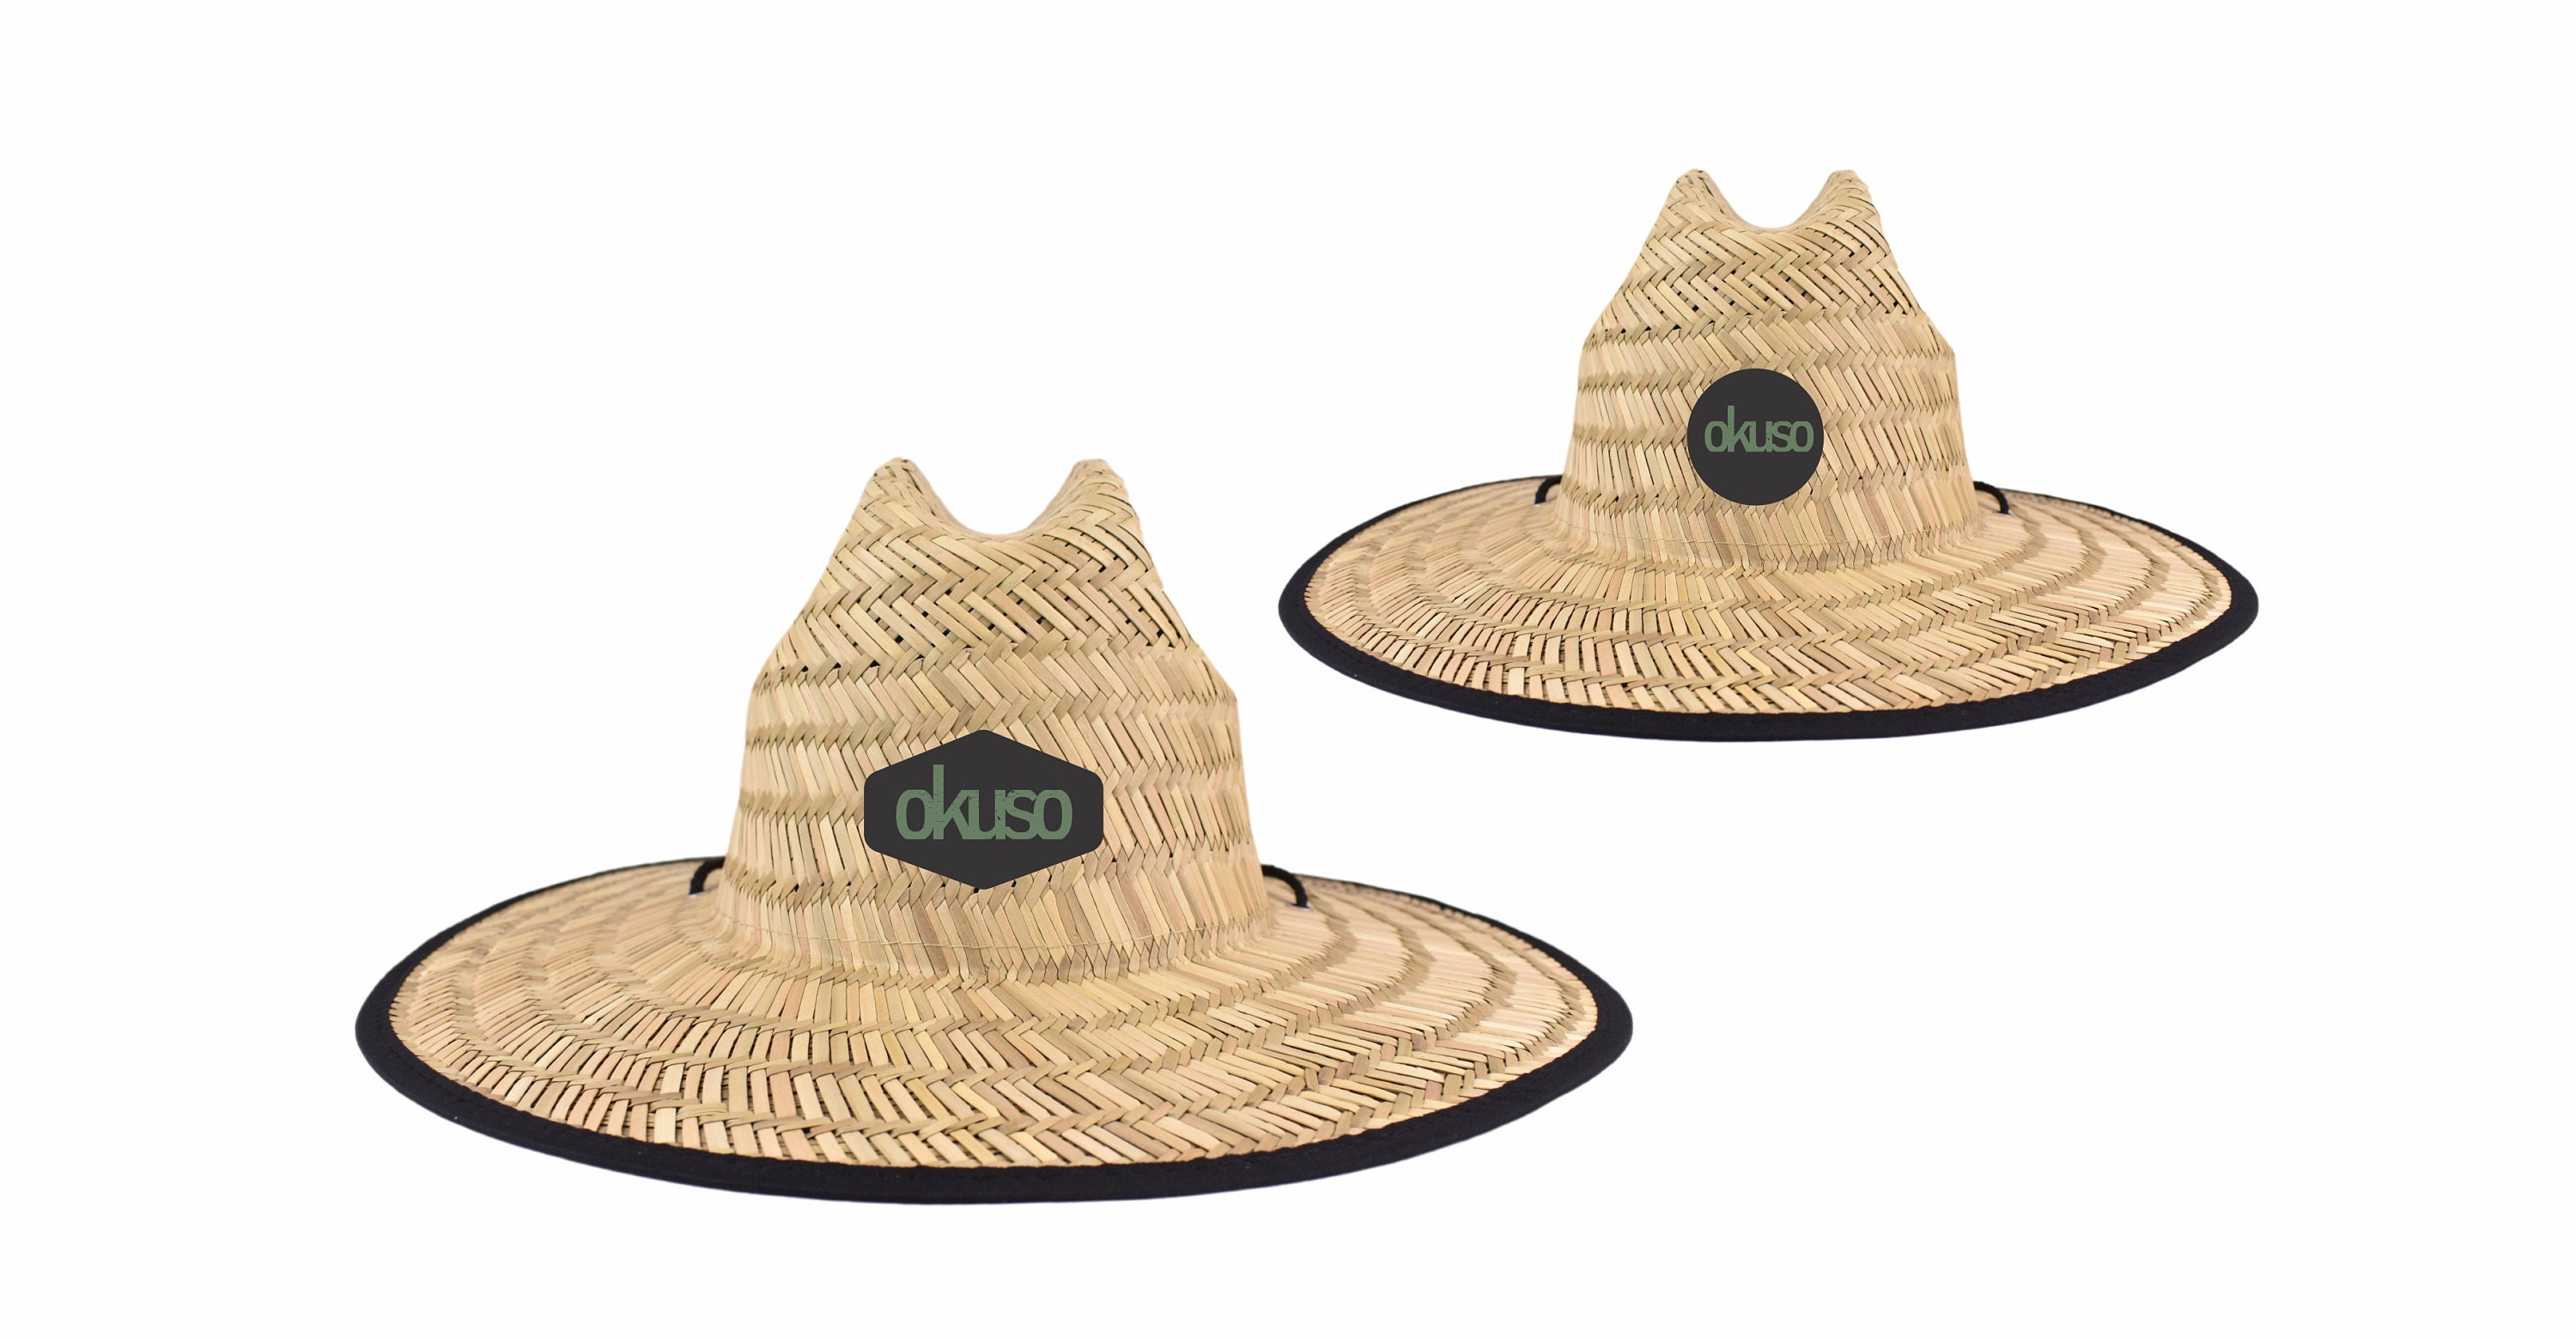 Okuso Straw Hat, Team Beach Hat, Lifeguard Straw Hat, Farm Hat